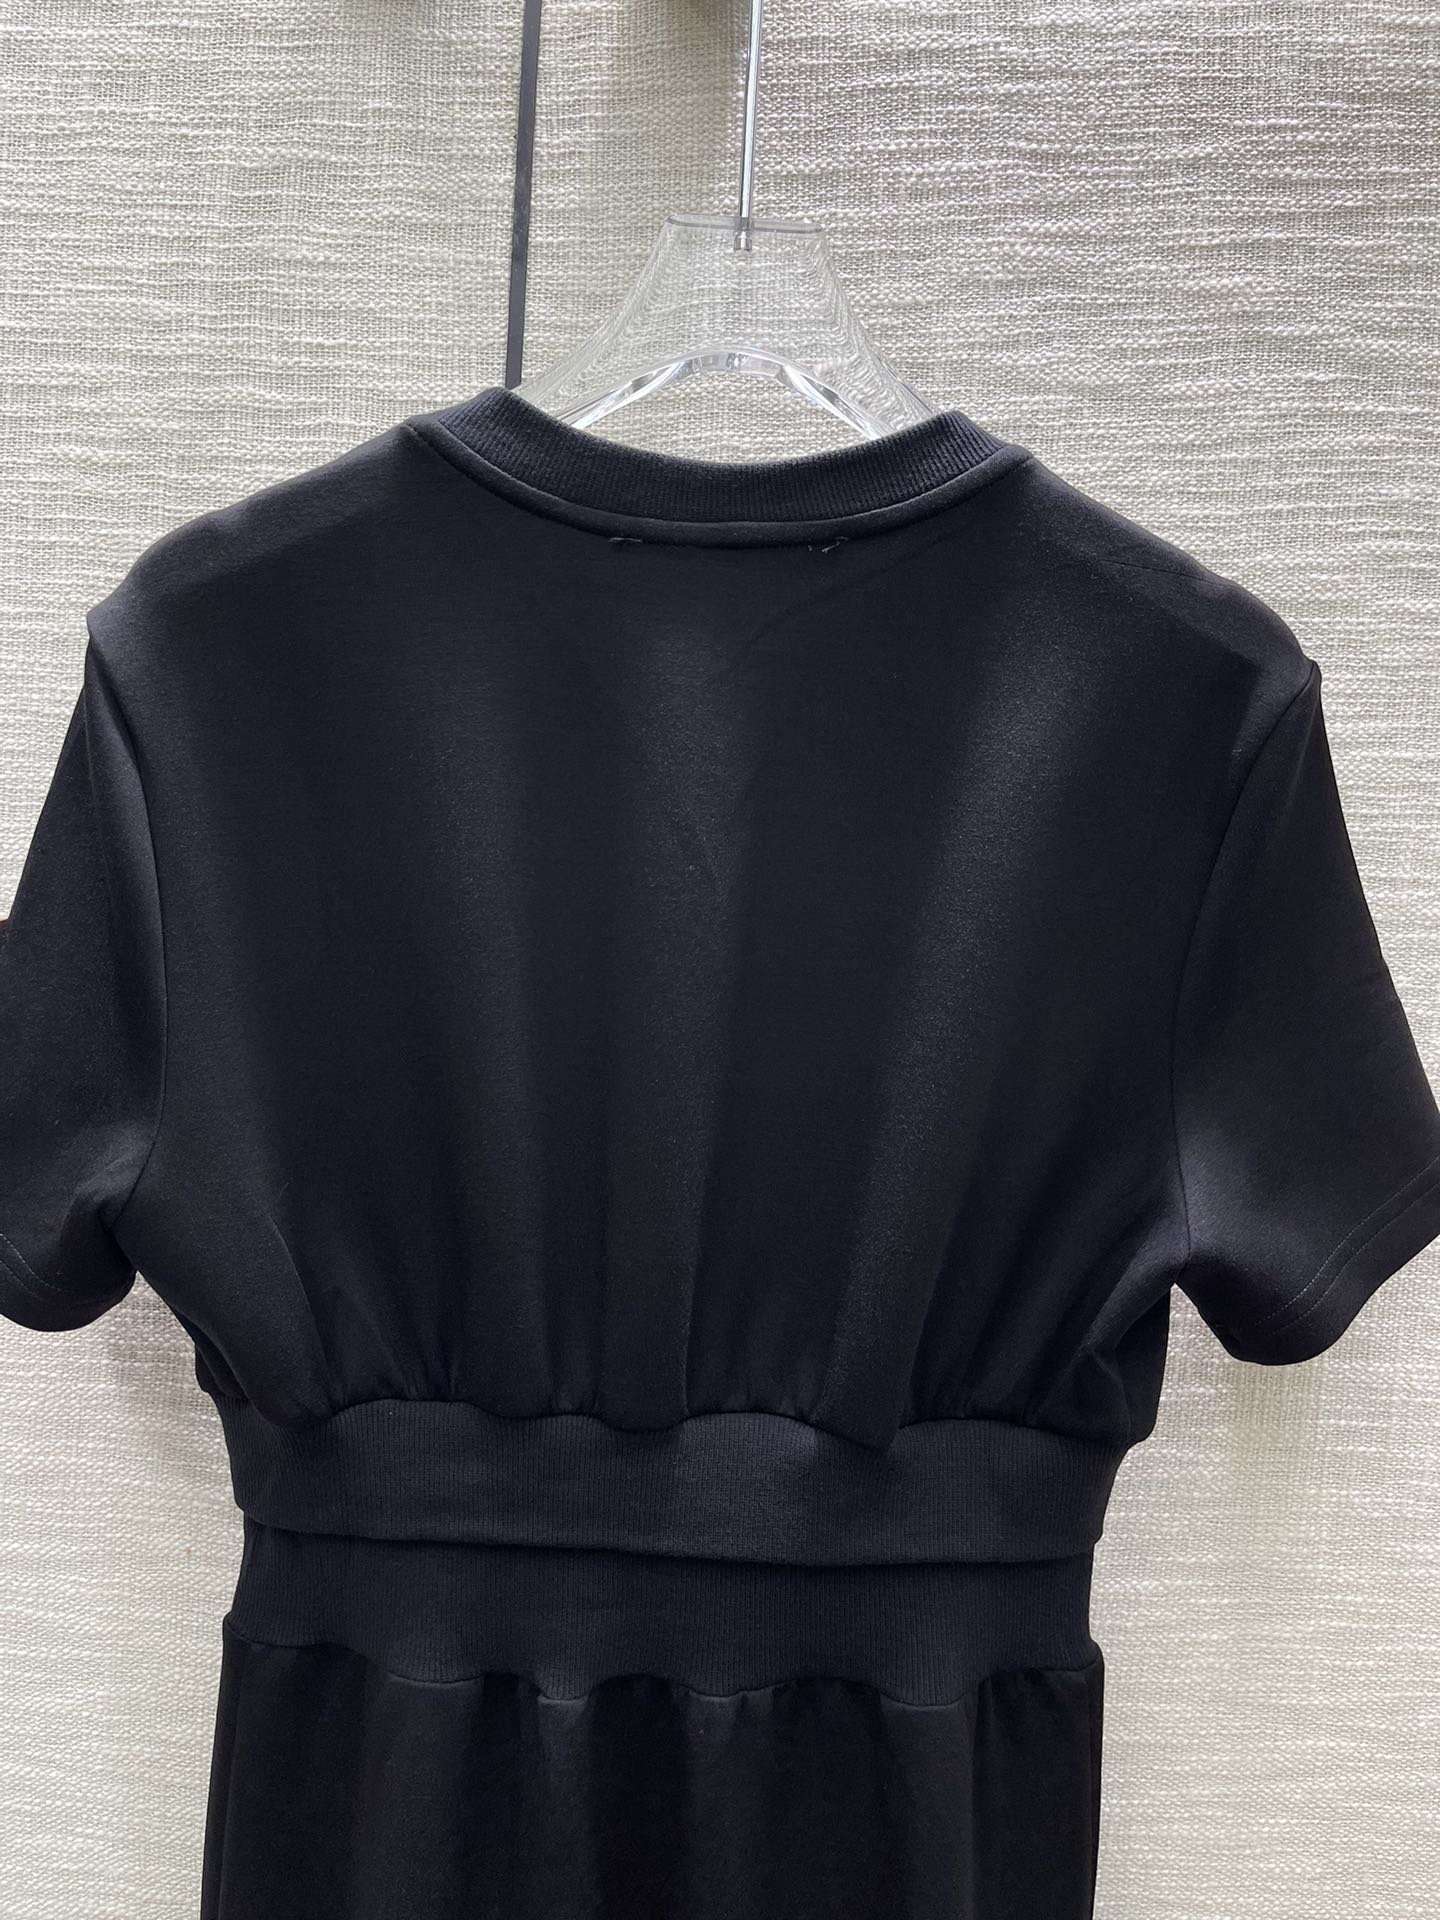 520 XL 2023 Runway Dress Crew Neck Short Sleeve Black Dress Empire Brand Same Style Dress Flora Print High Quality Womens Clothes weilanE90